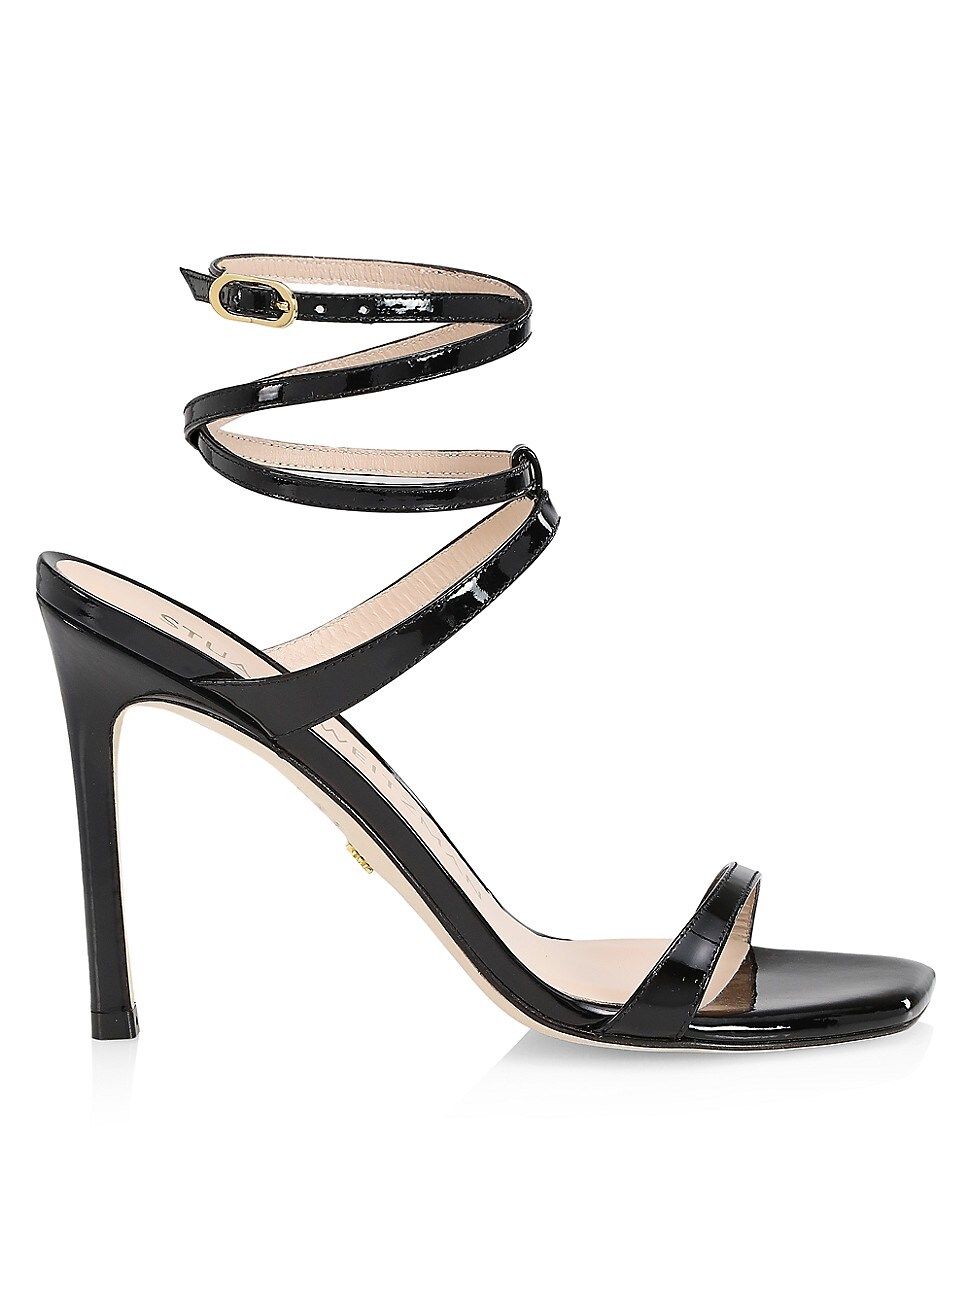 Stuart Weitzman Ellsie Ankle-Wrap Patent Leather Sandals | Saks Fifth Avenue